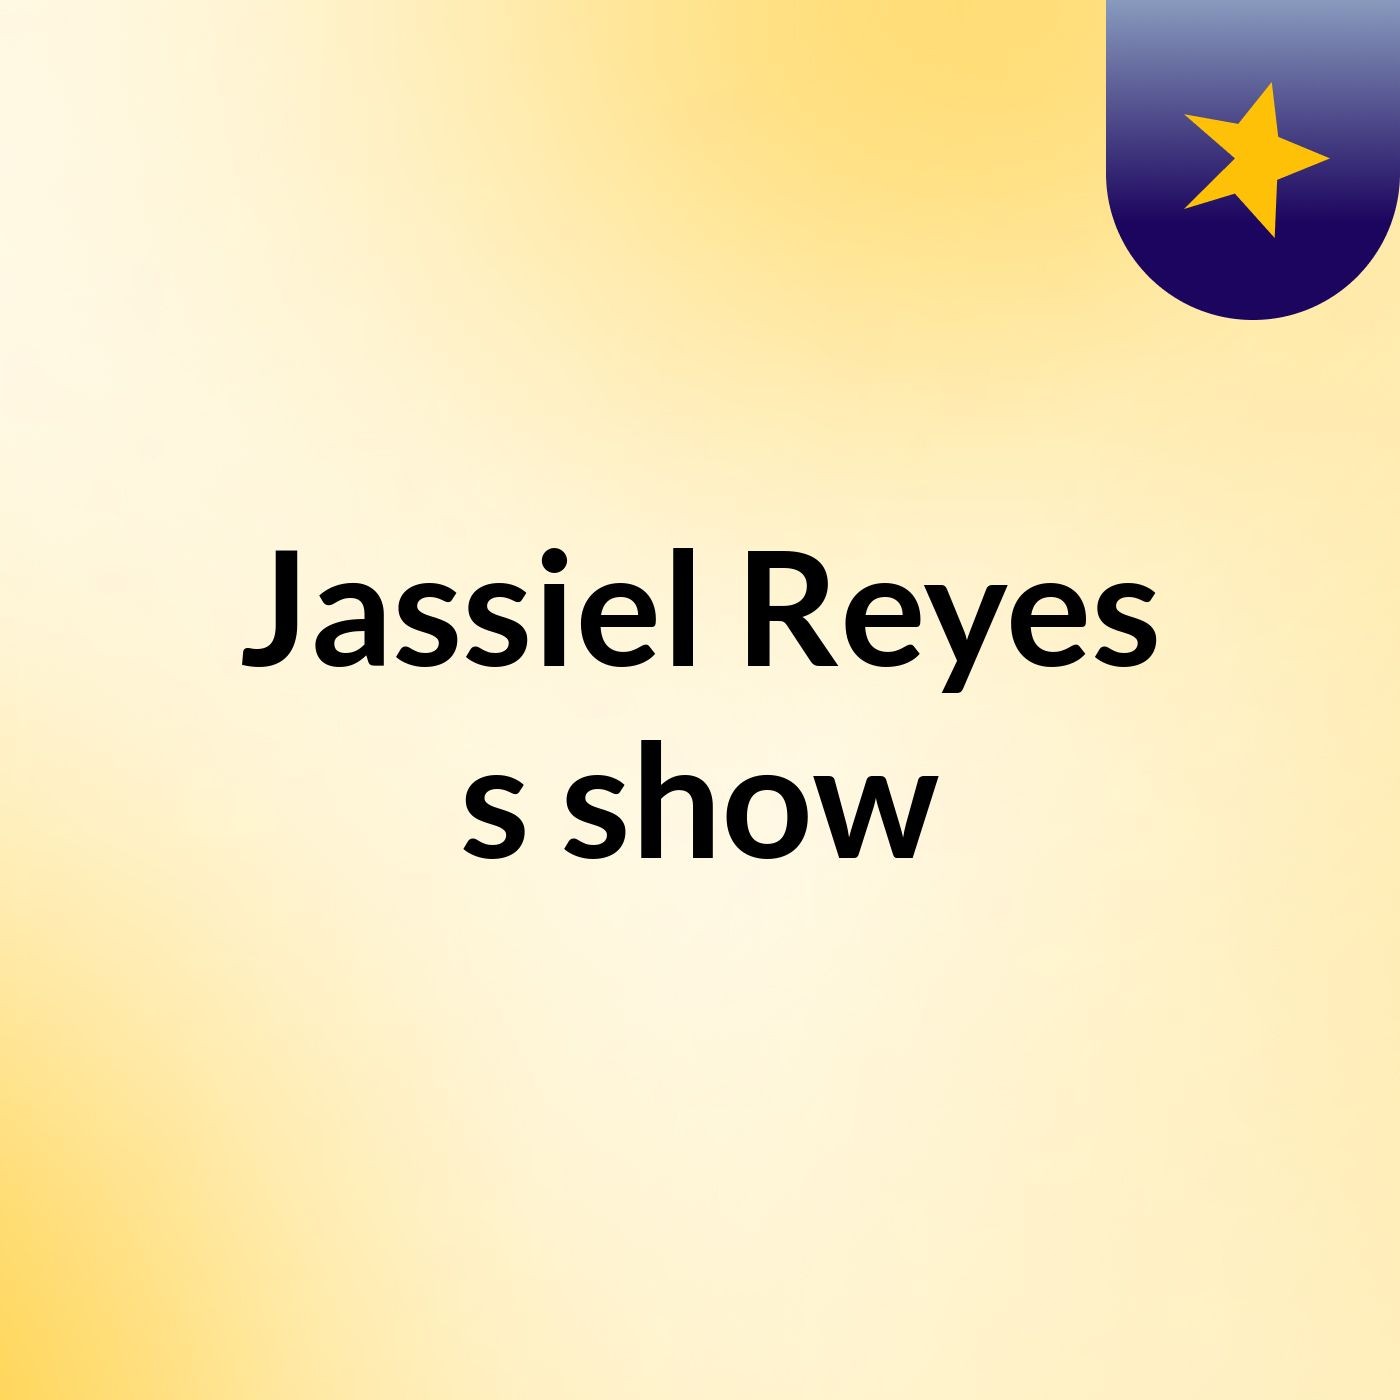 Jassiel Reyes's show